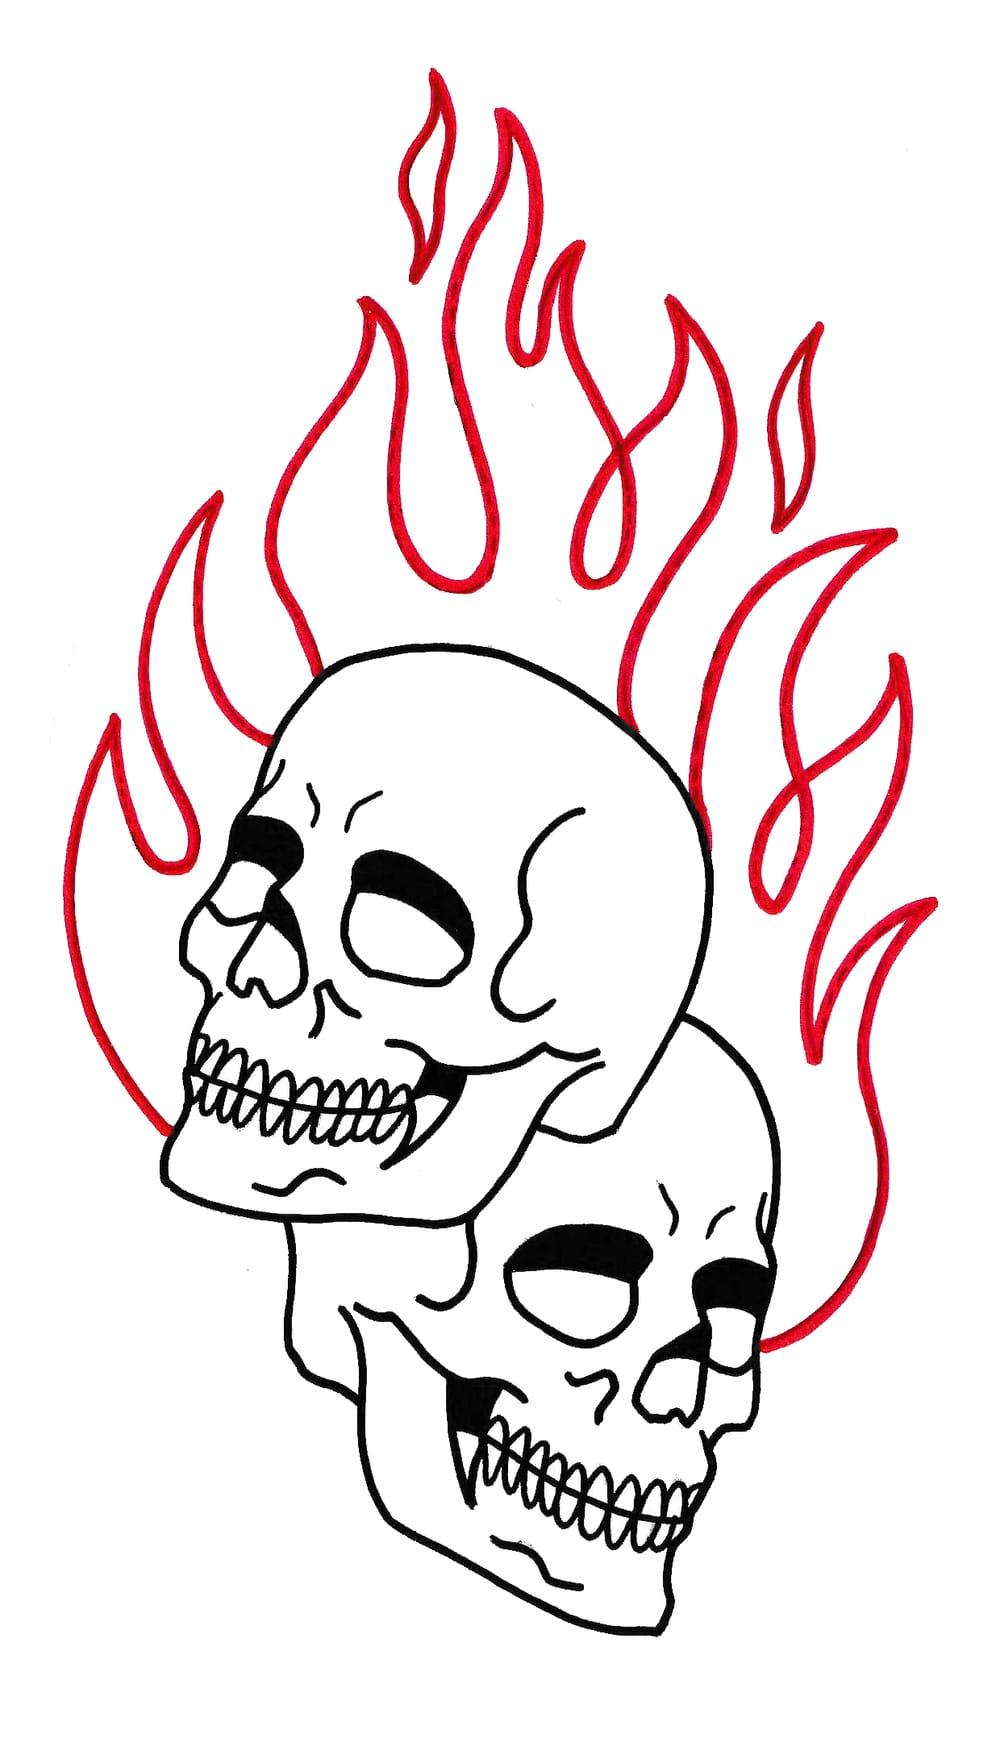 Flaming Skulls in Red